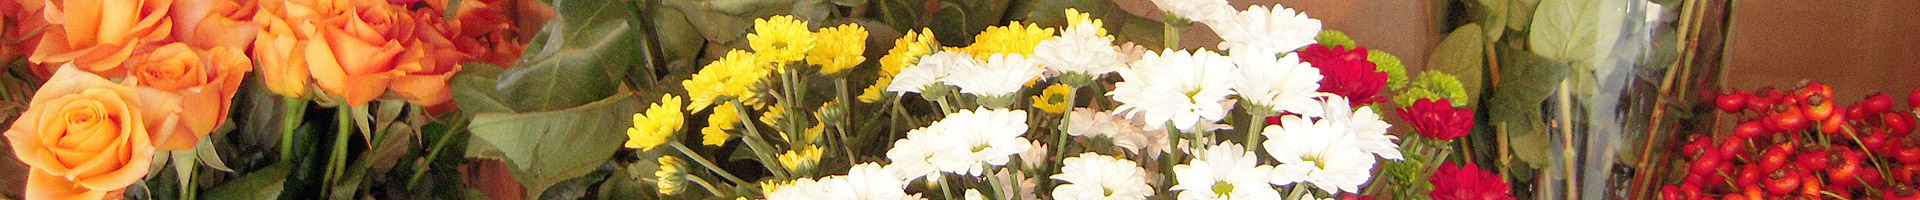 Schnittblumen, Beet-, Balkon- & Topfpflanzen